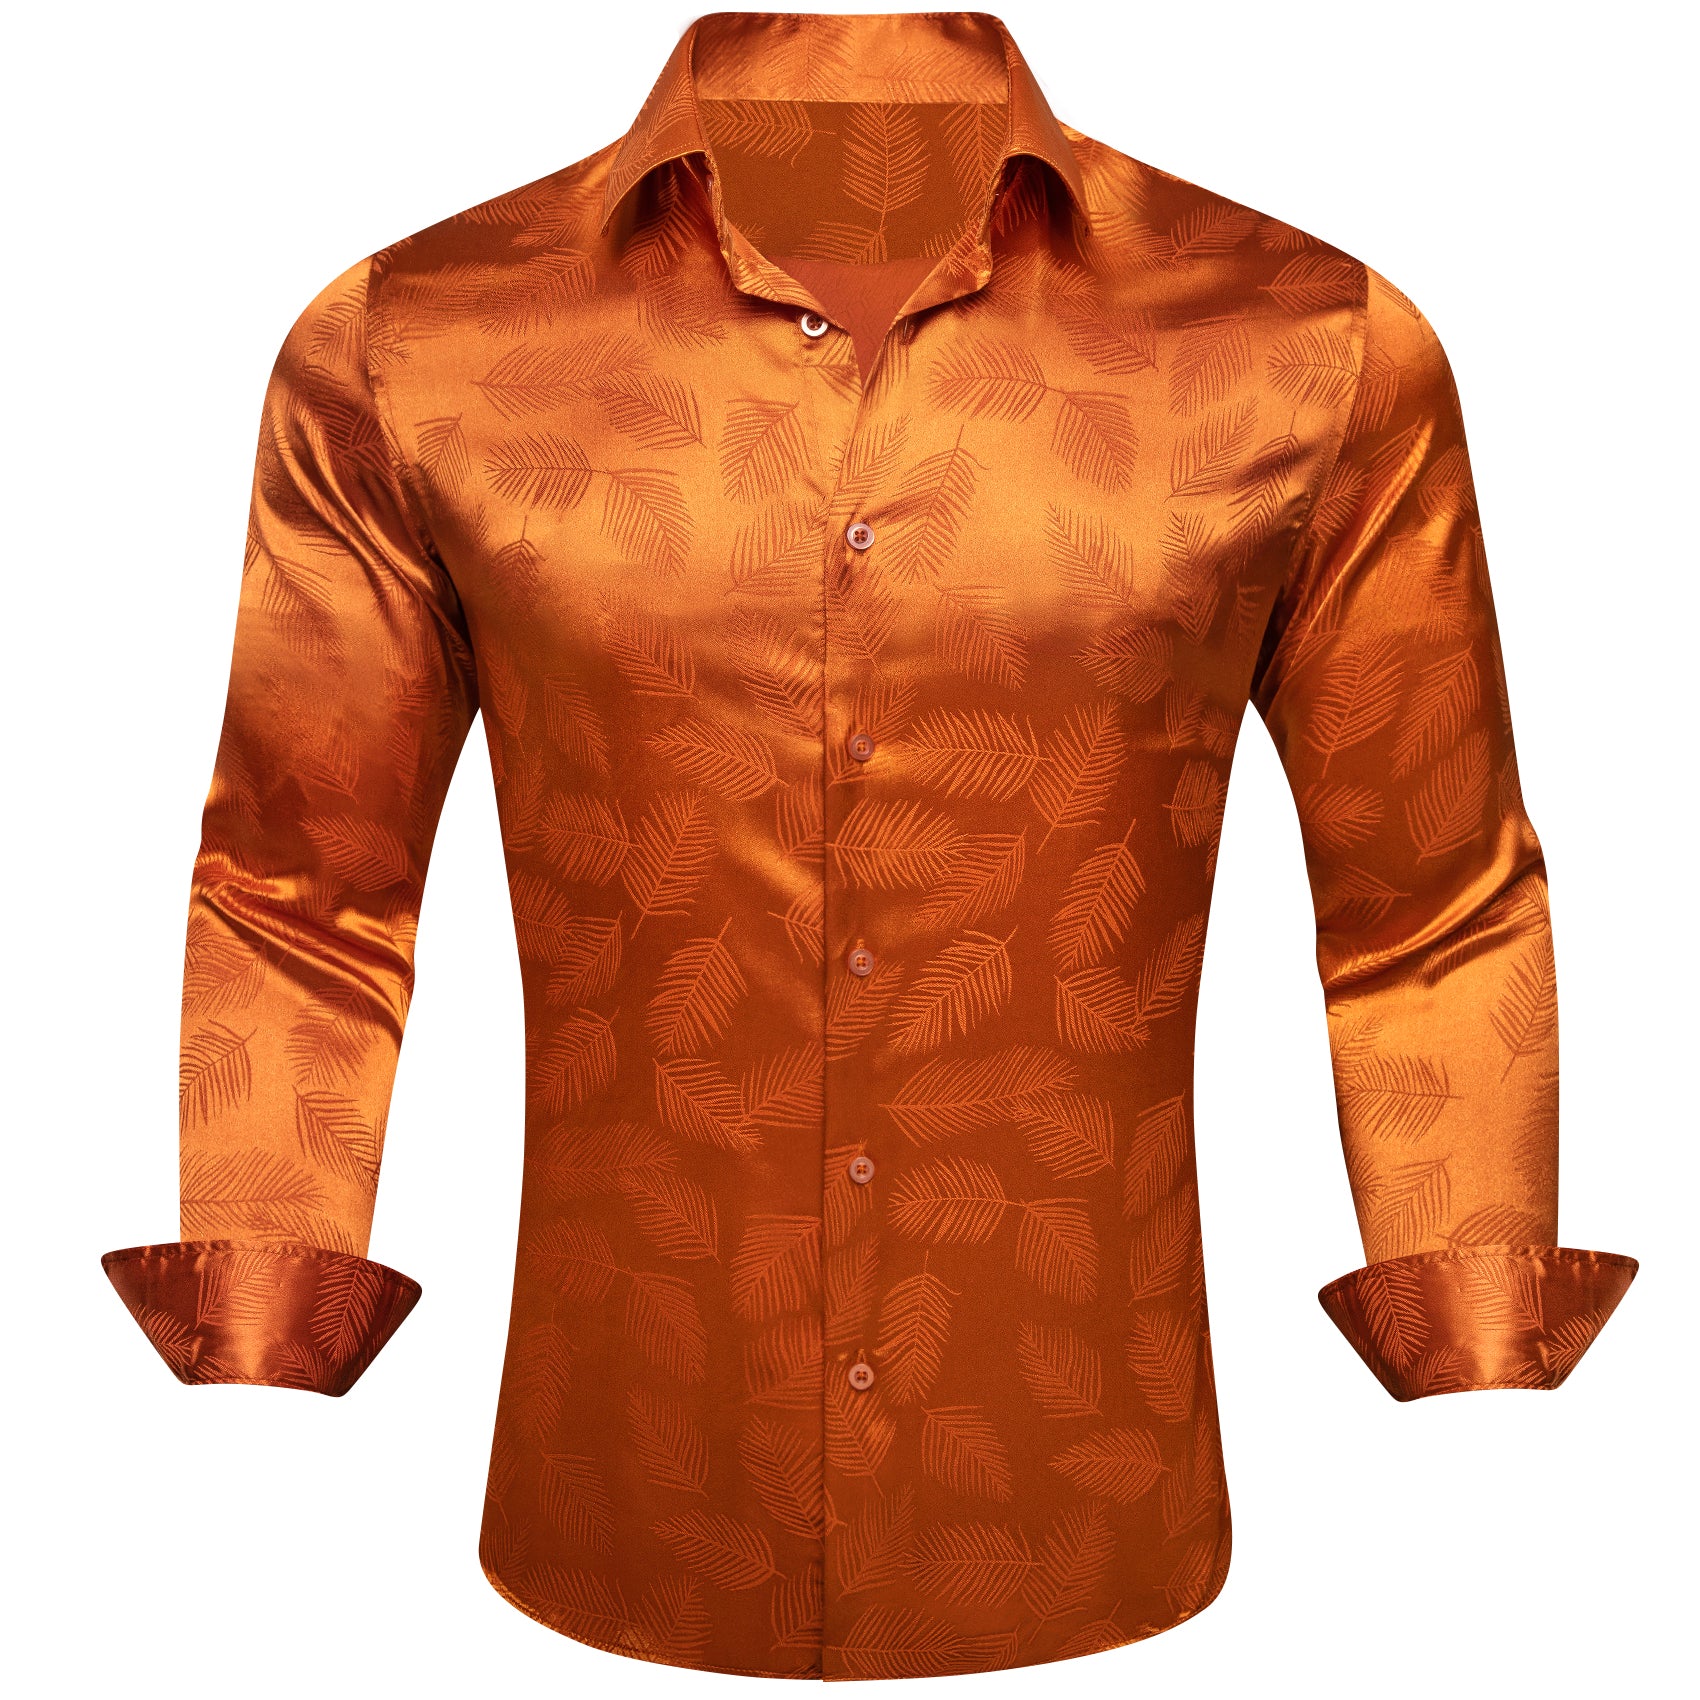 Barry.wang Orange Feather Silk Men's Shirt